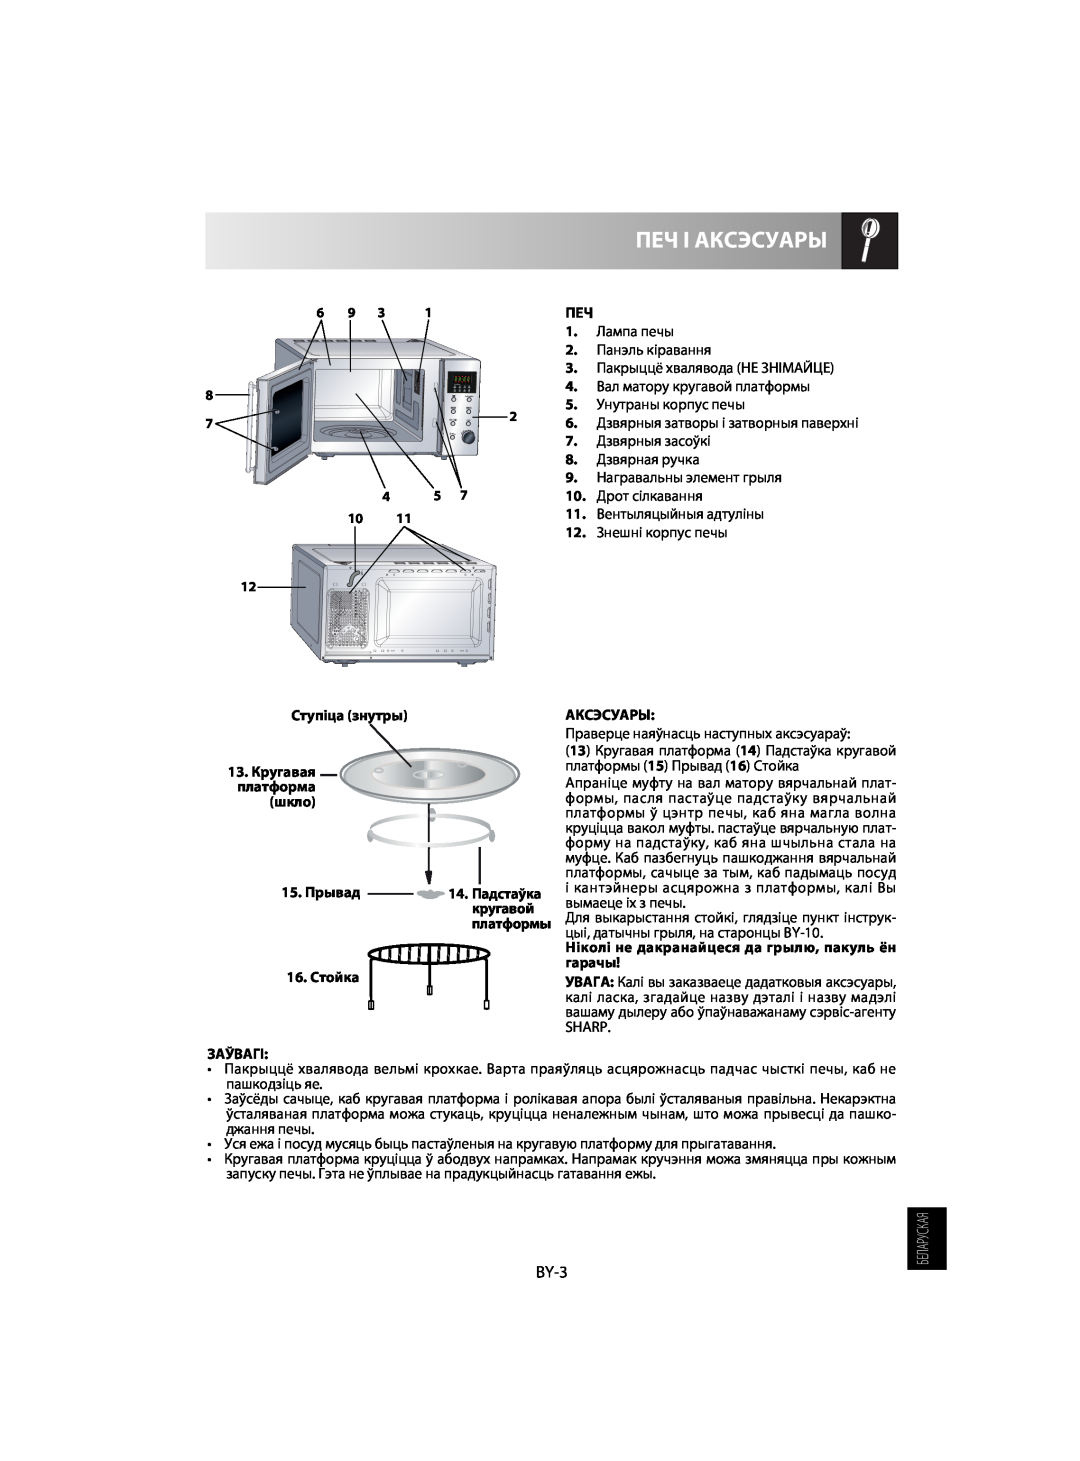 Sharp R-63ST operation manual Печ І Аксэсуары, BY-3 